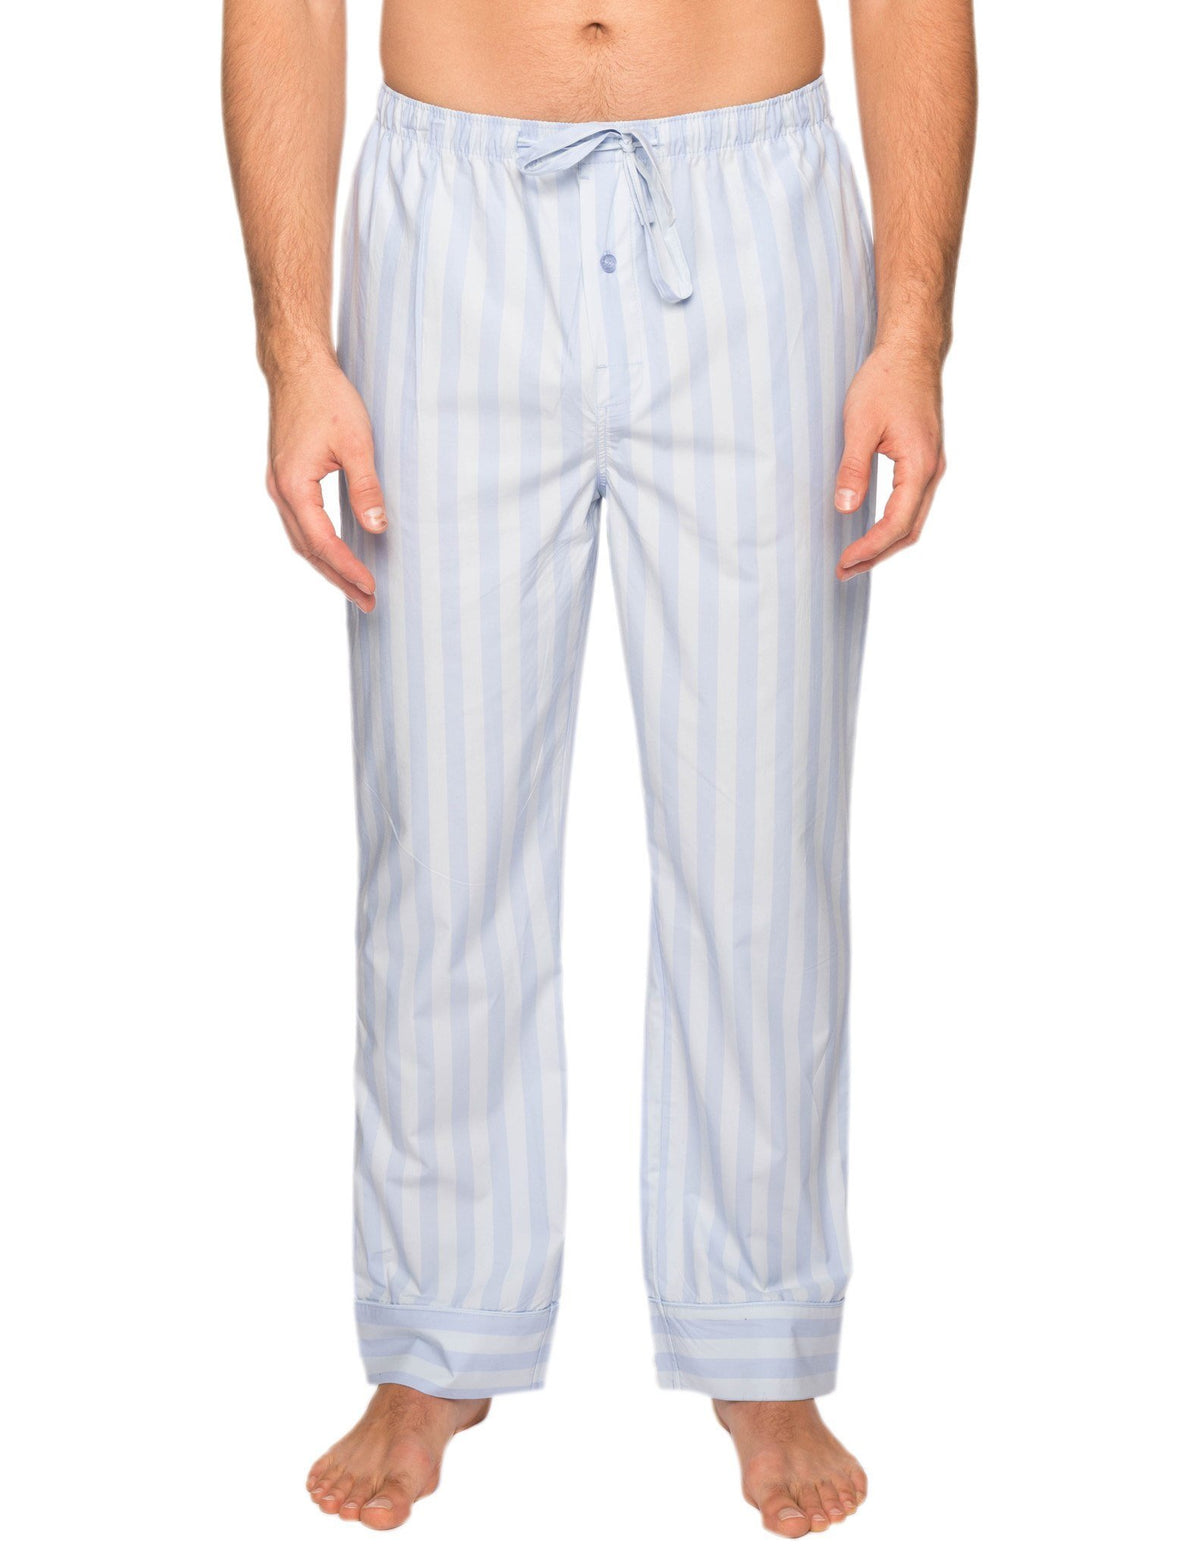 Men's 100% Cotton Comfort-Fit Sleep/Lounge Pants - Stripes Chambray Blue